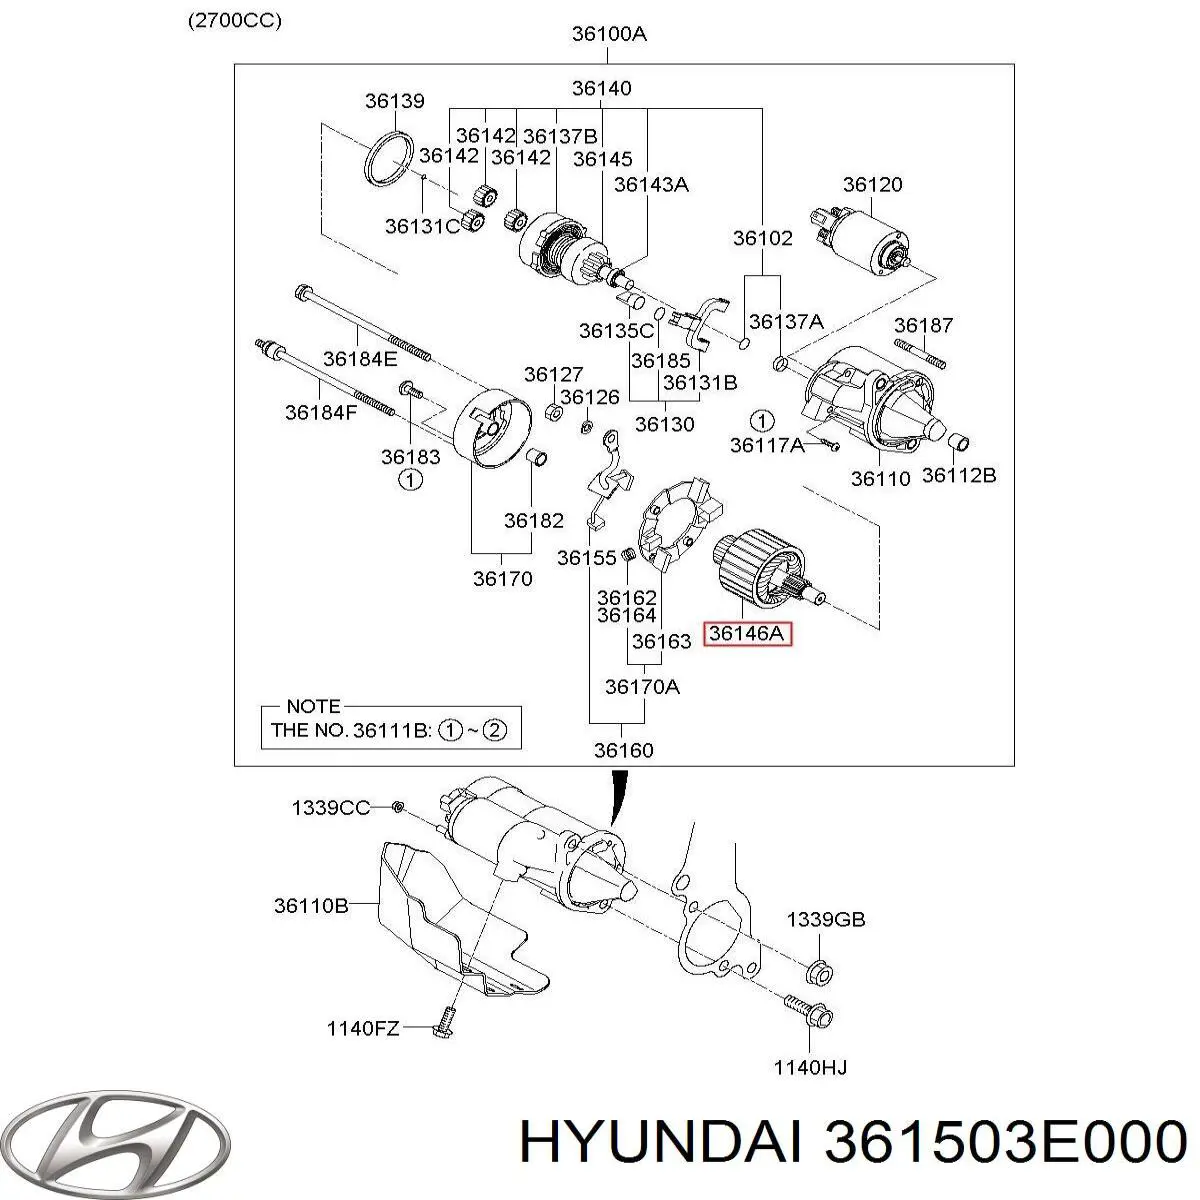 Induzido (rotor) do motor de arranco para Honda Accord (CG)